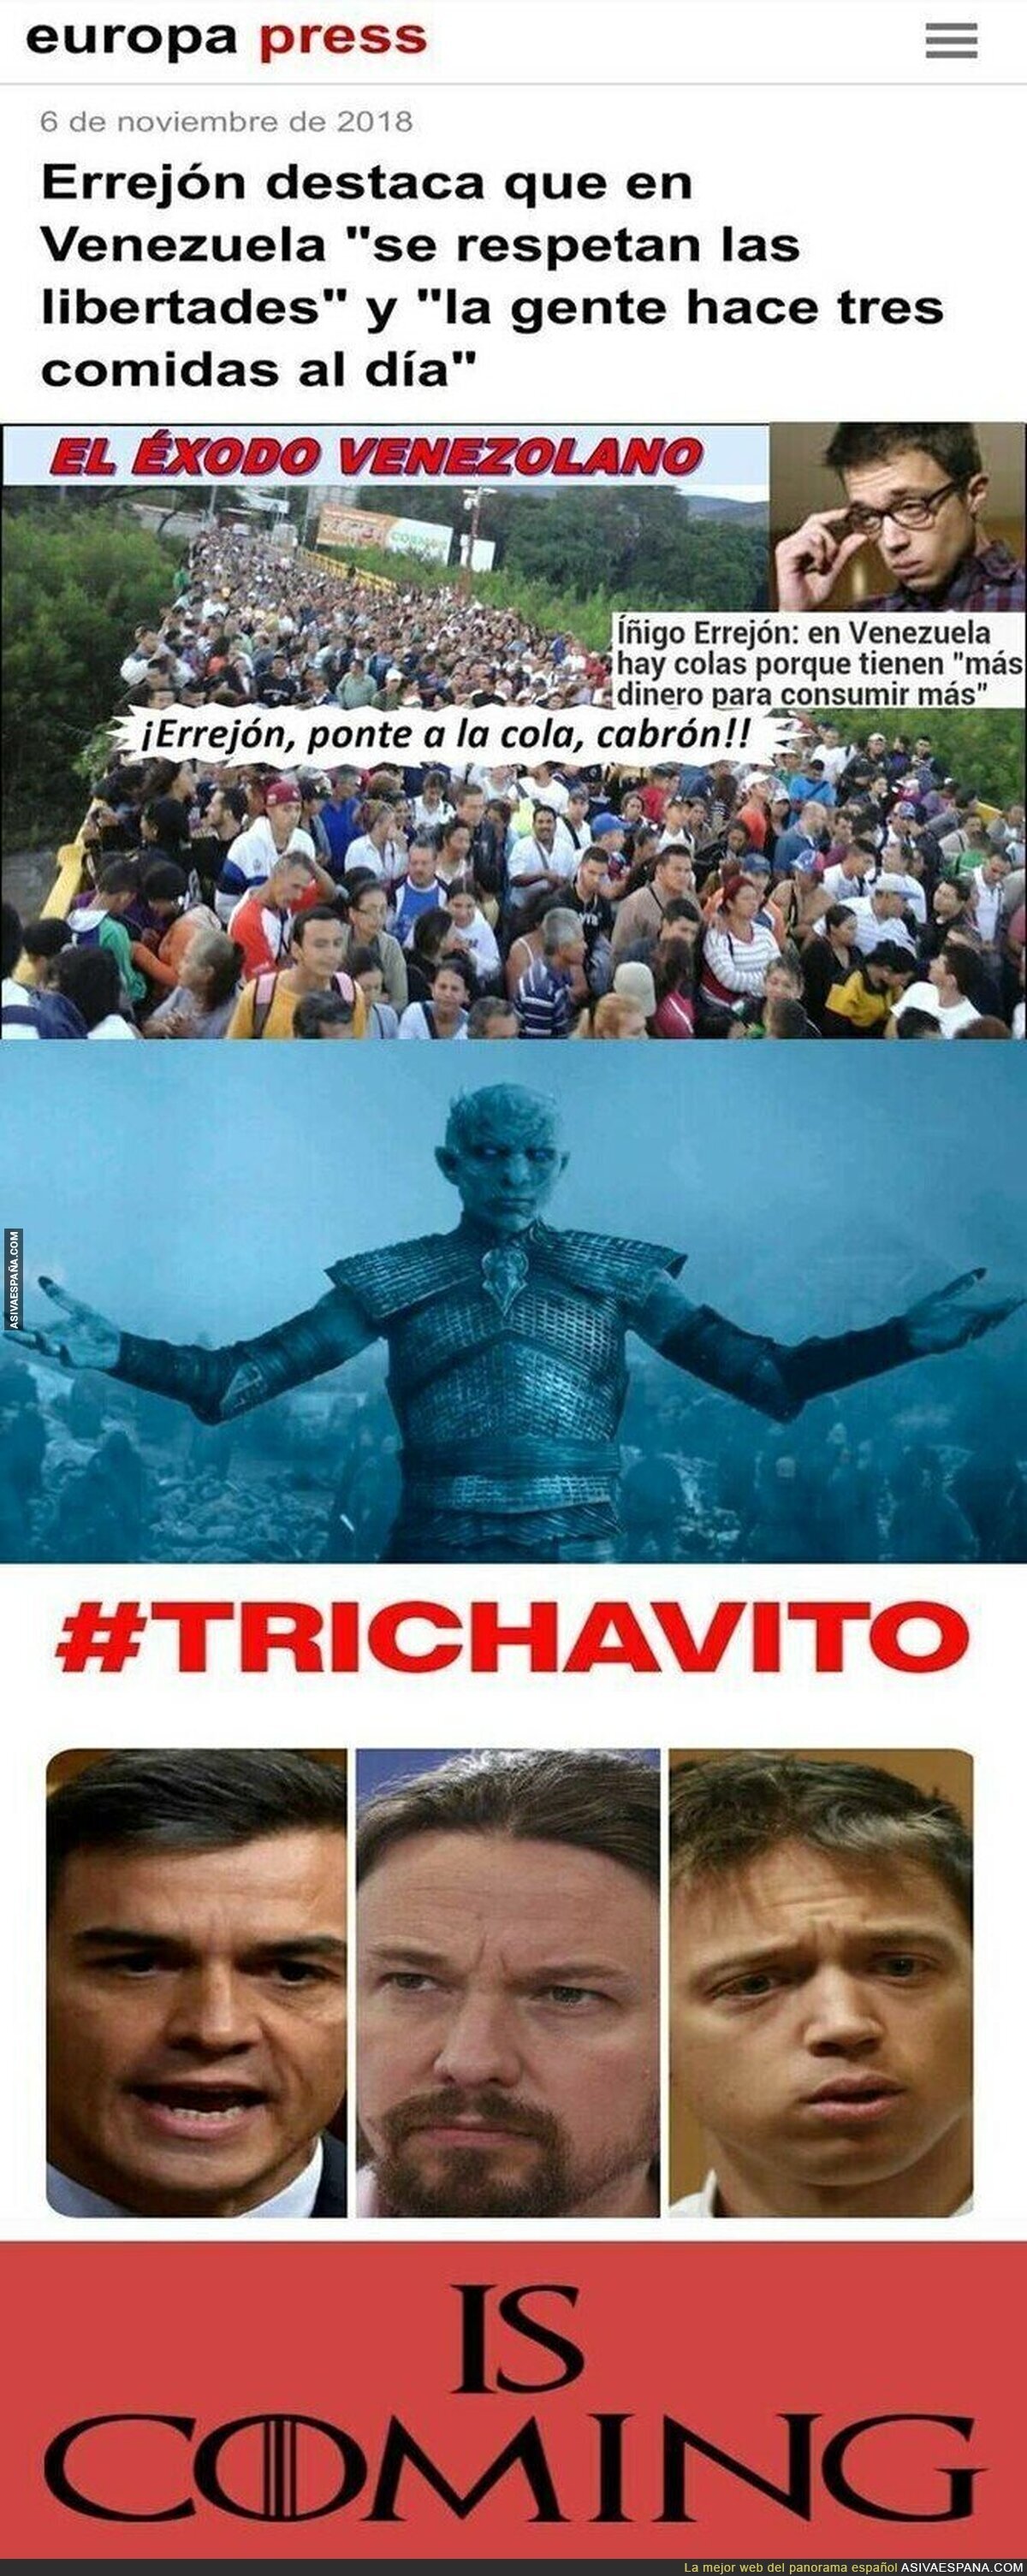 TRICHAVITO IS COMING